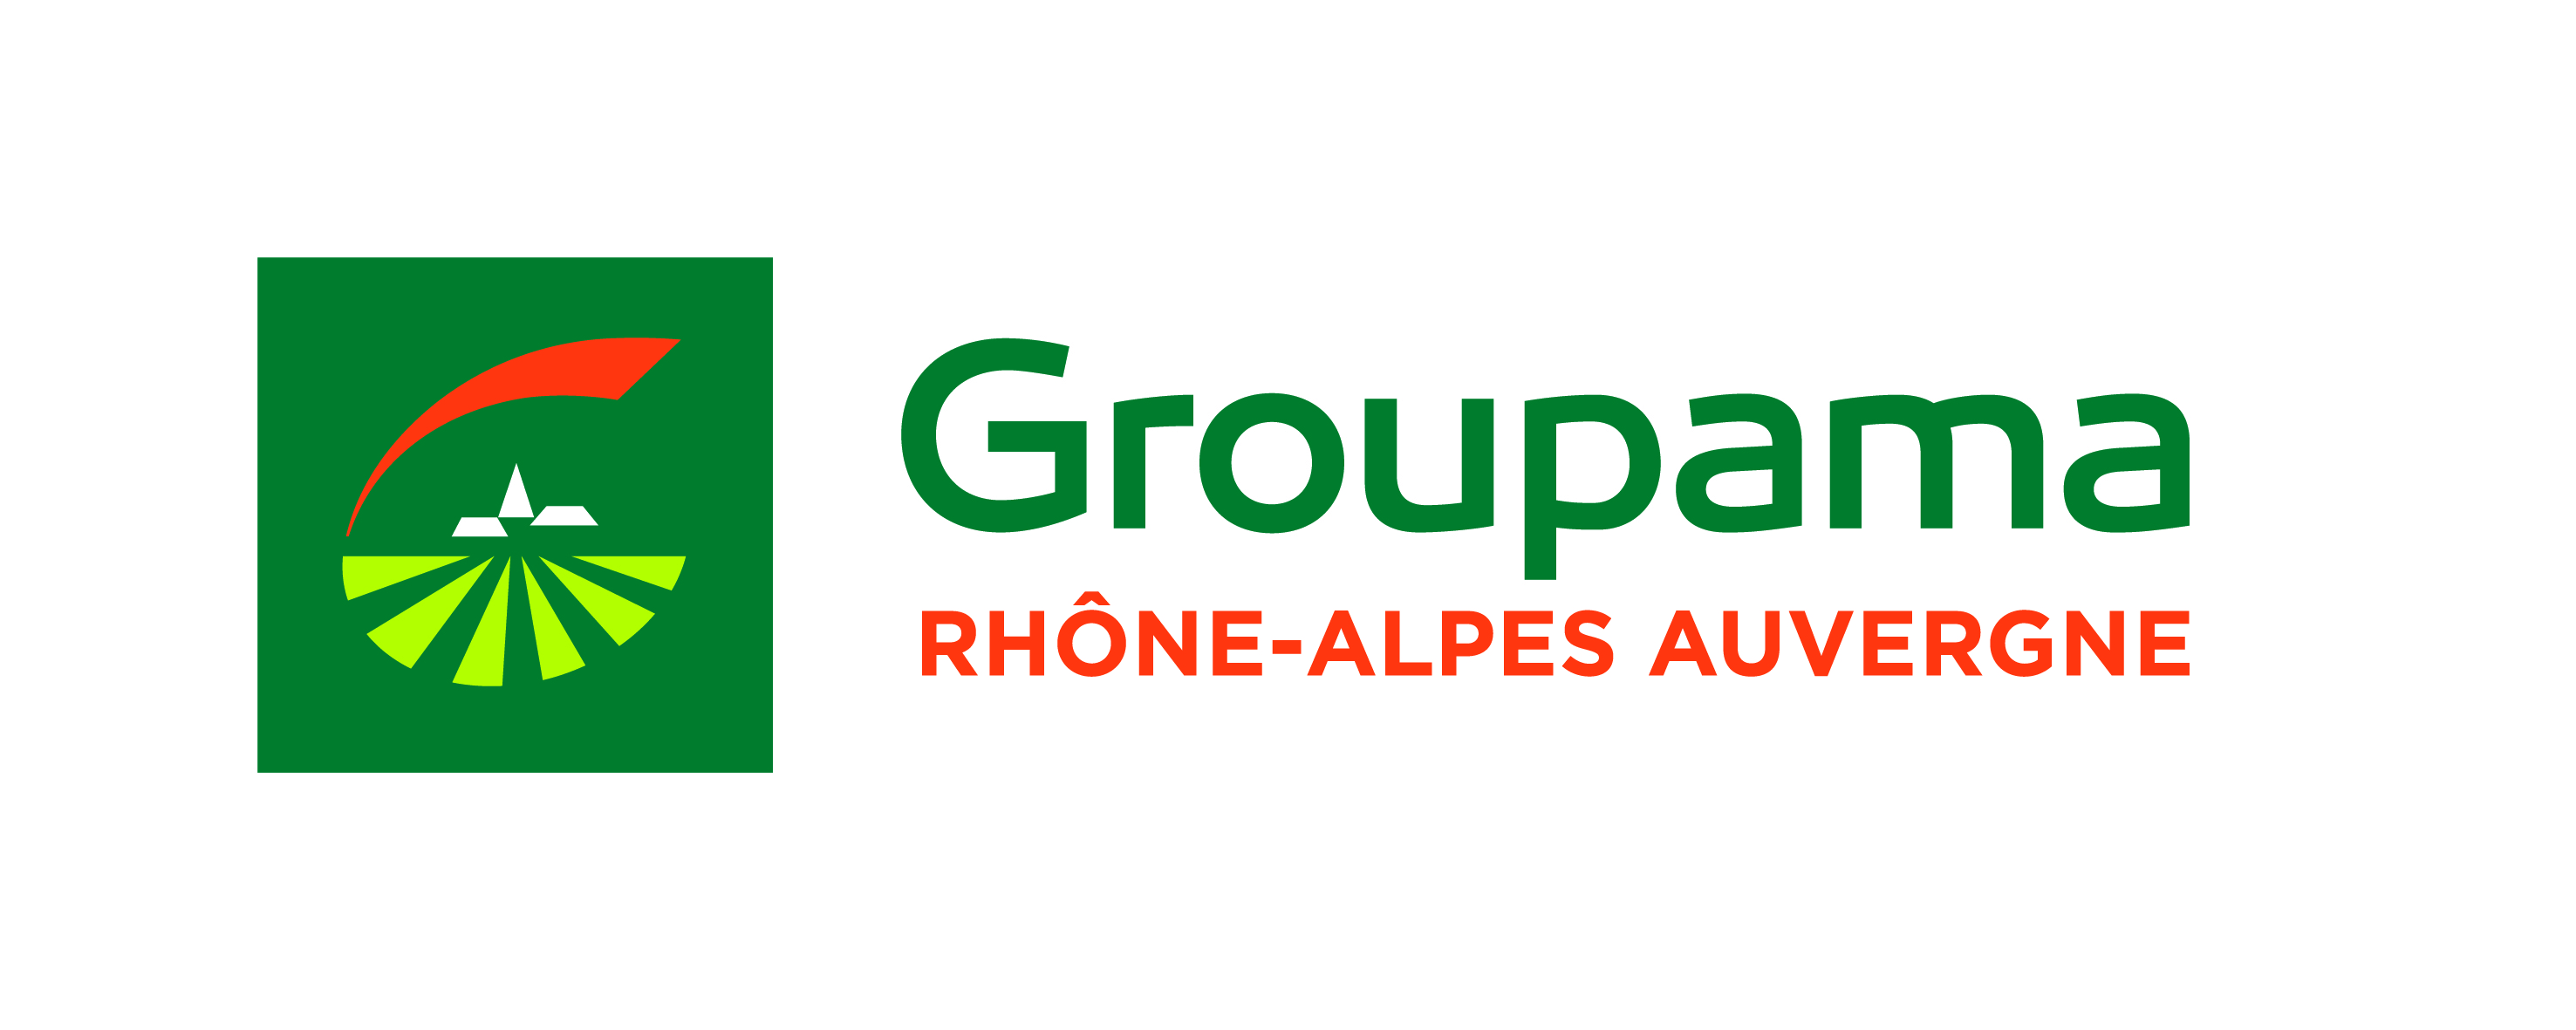 Groupama_Rhone Alpes Auvergne